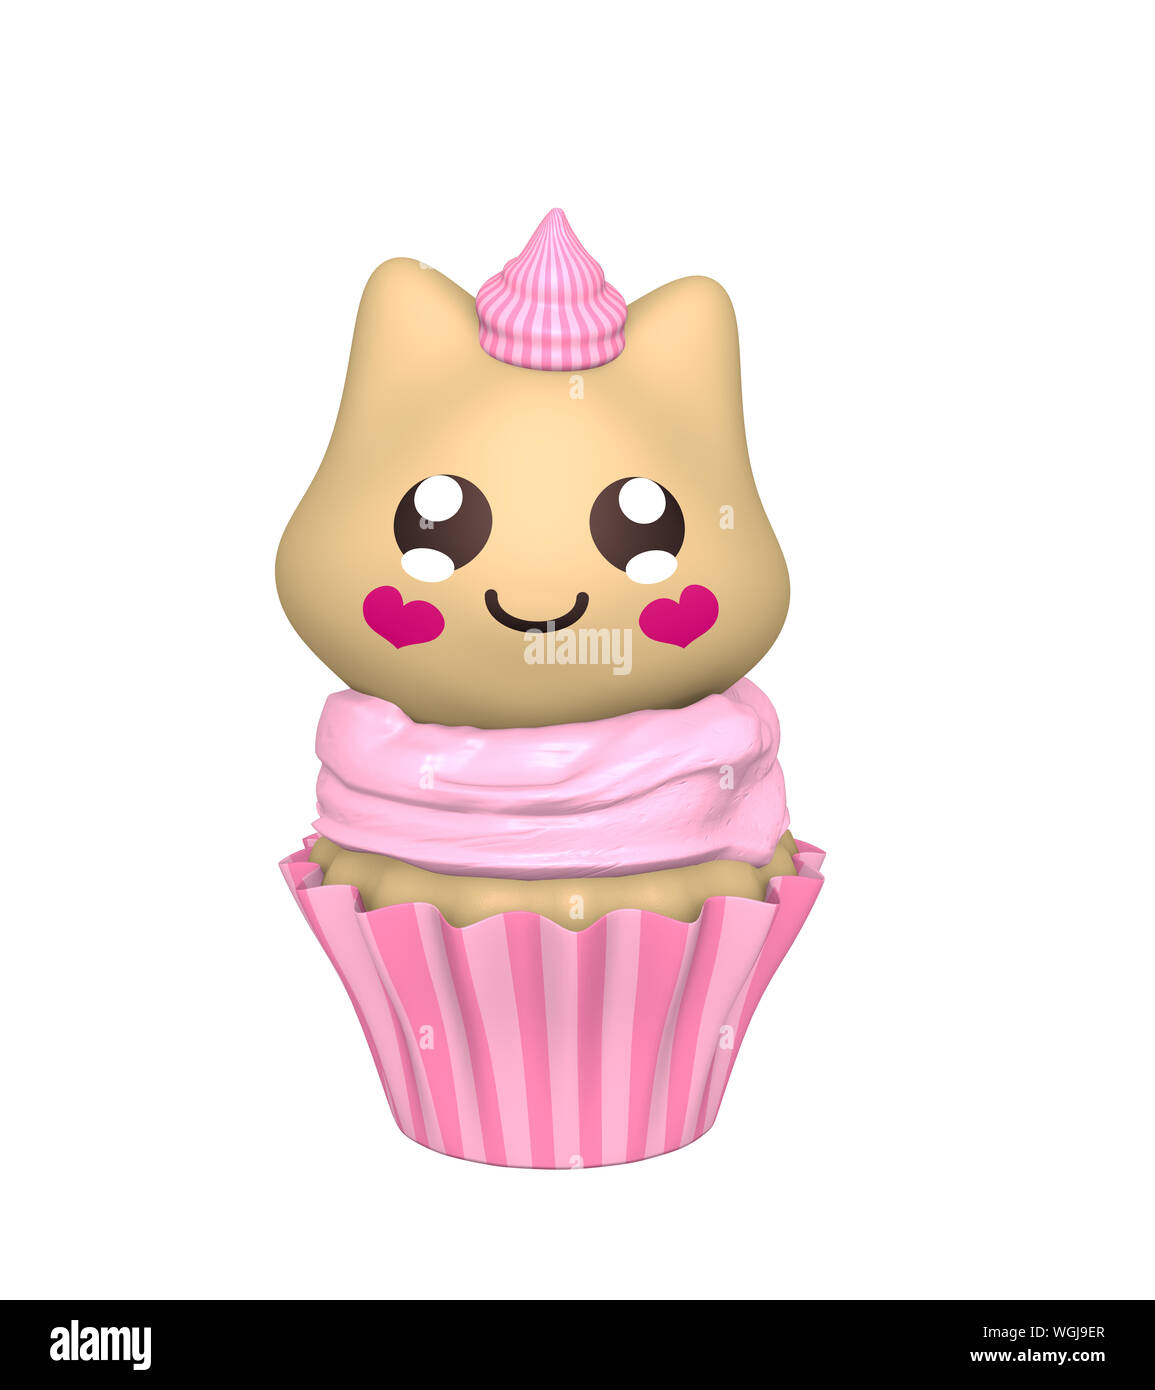 Cupcake rose avec kitty en style kawaii. 3D render Banque D'Images